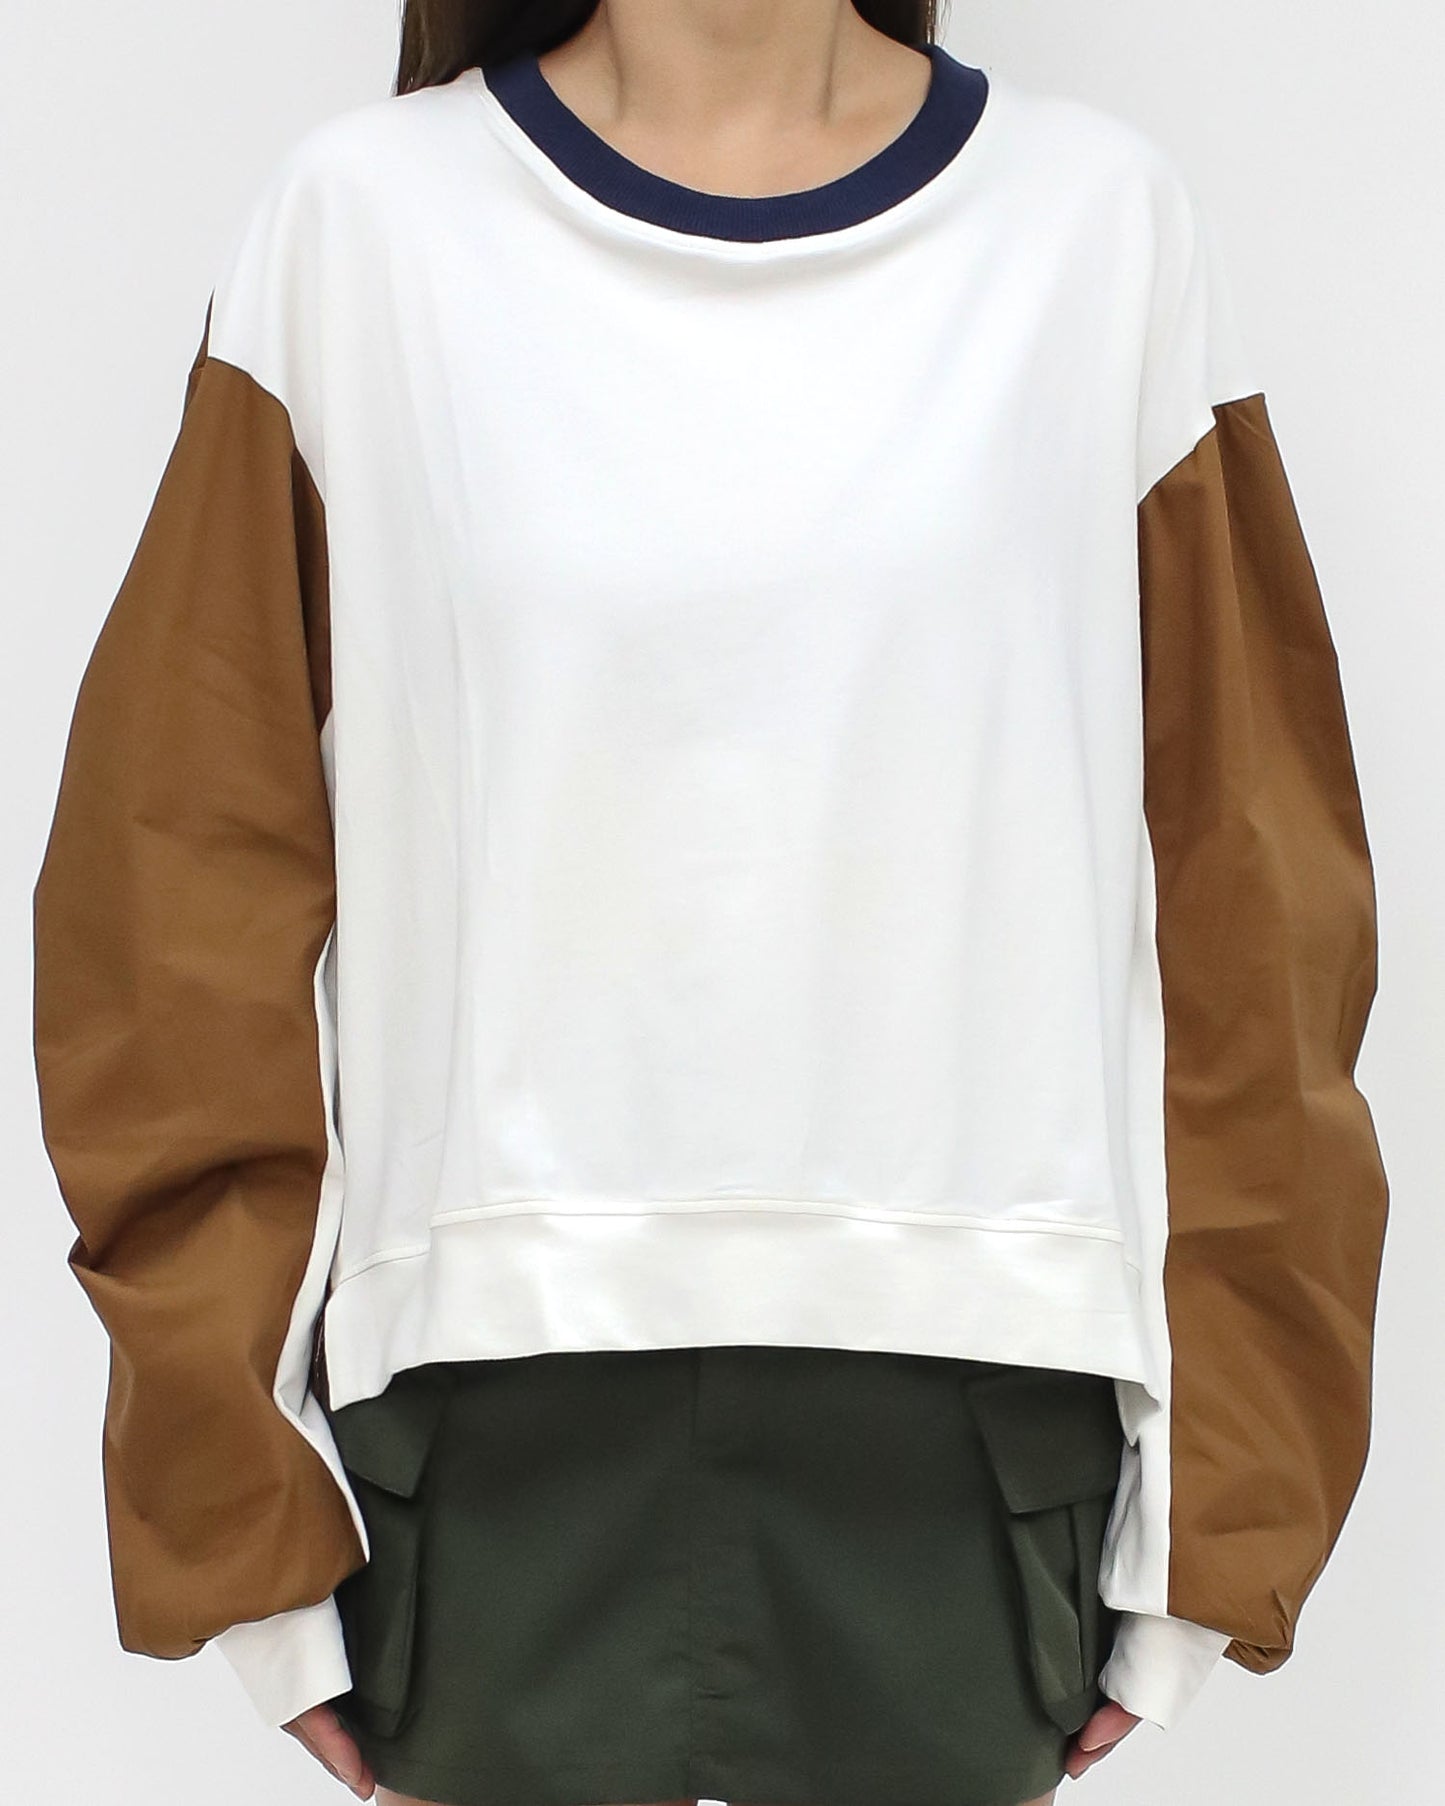 ivory cotton & brown shirt back sweatshirt